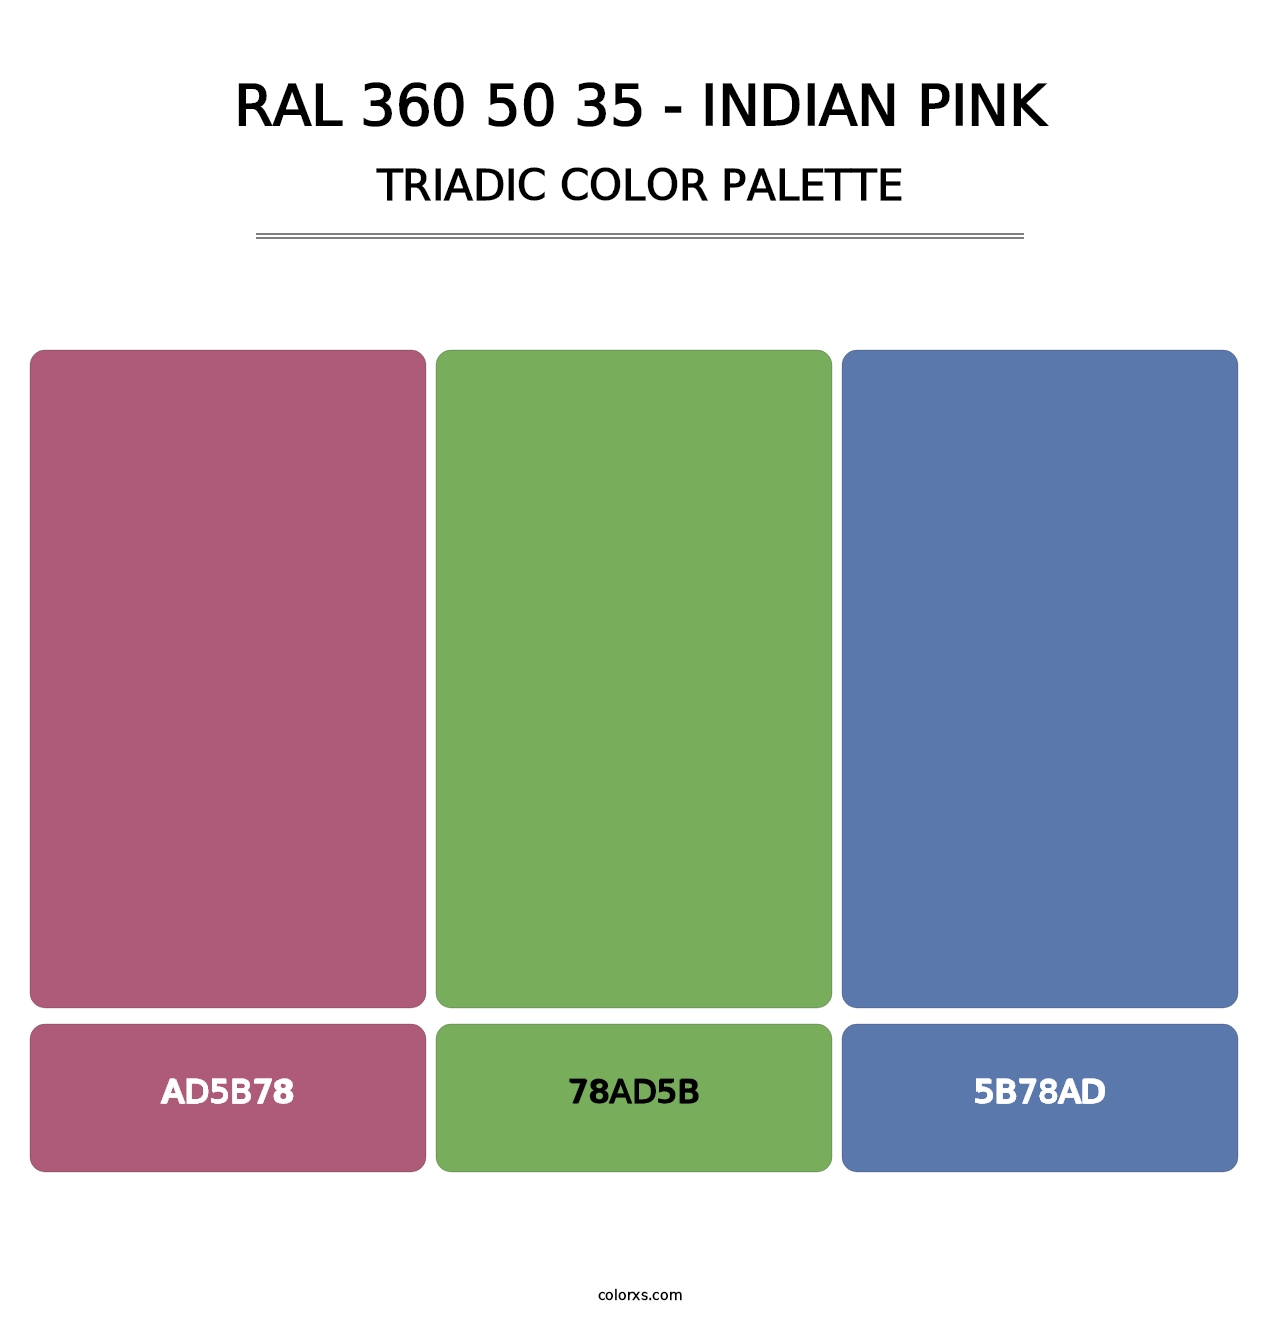 RAL 360 50 35 - Indian Pink - Triadic Color Palette